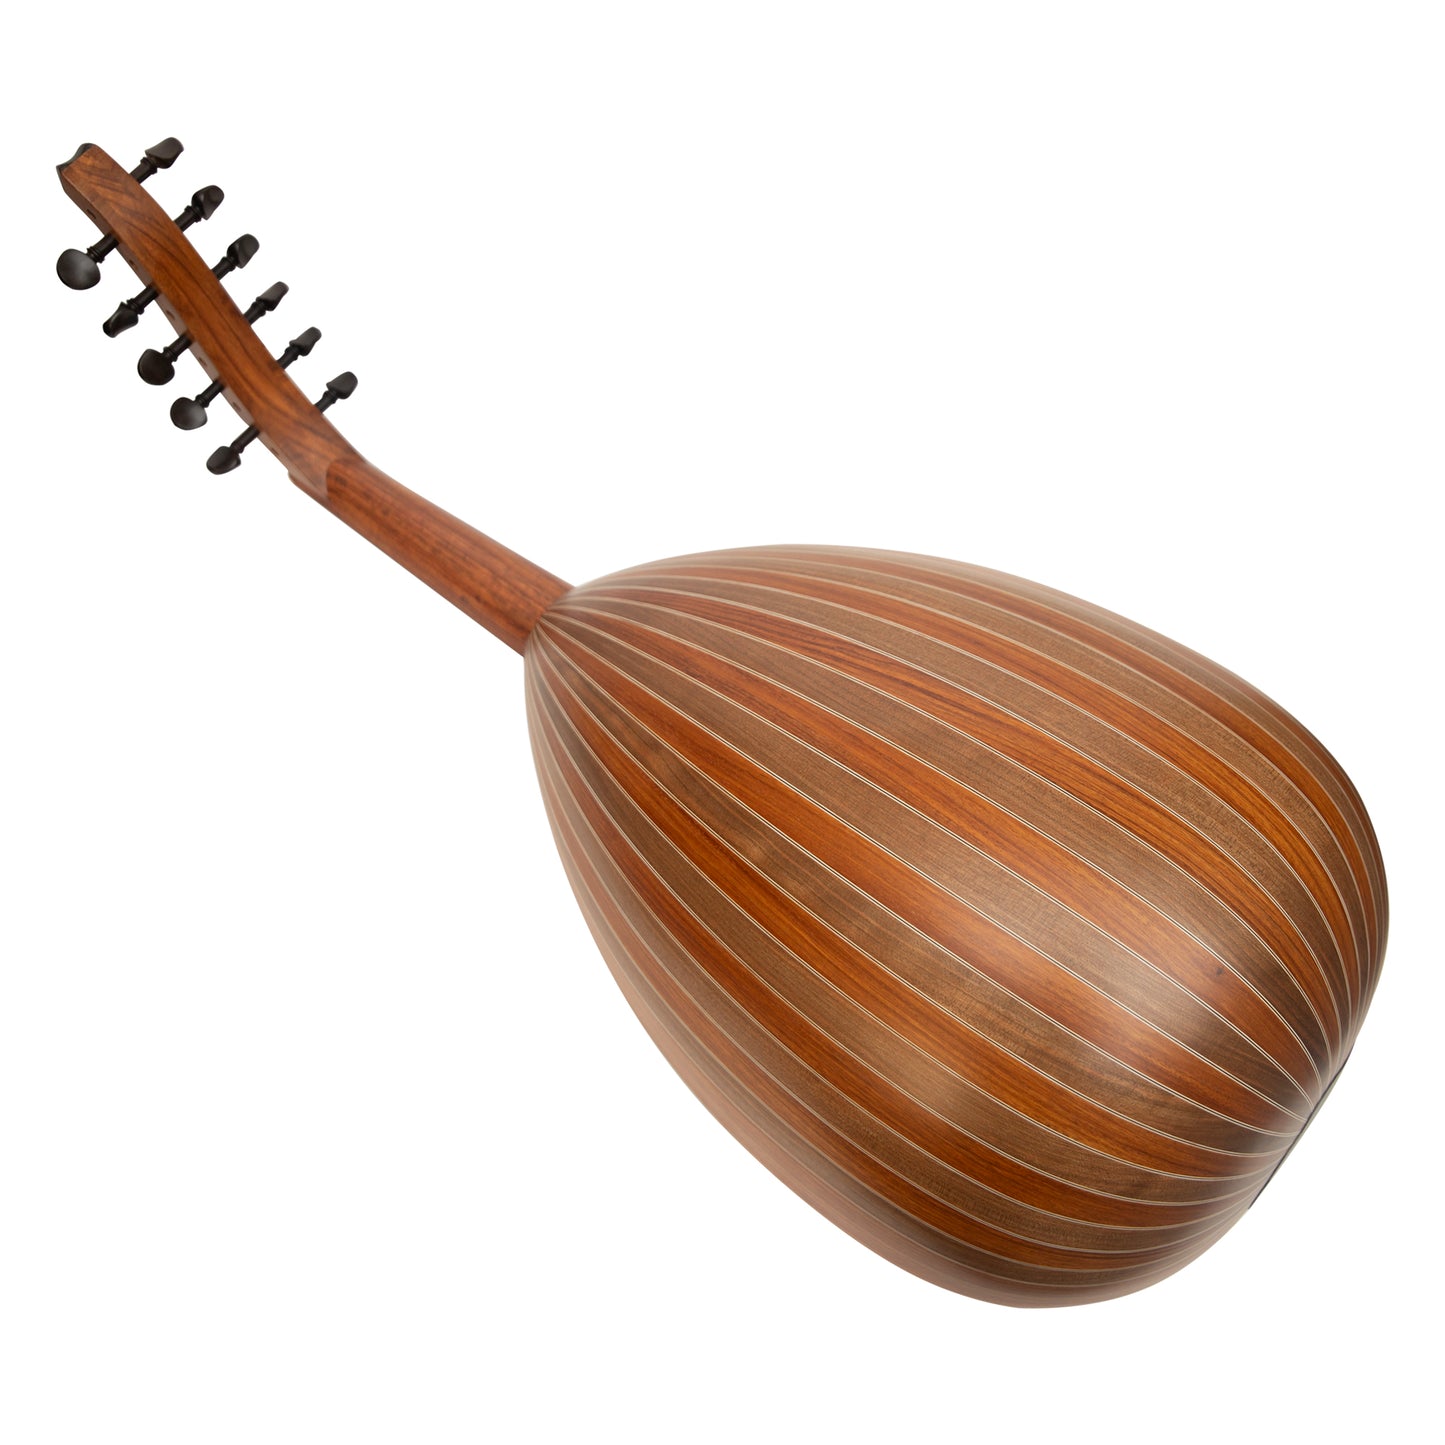 Heartland Turkish Oud, 11 Strings Variegated Rosewood Walnut